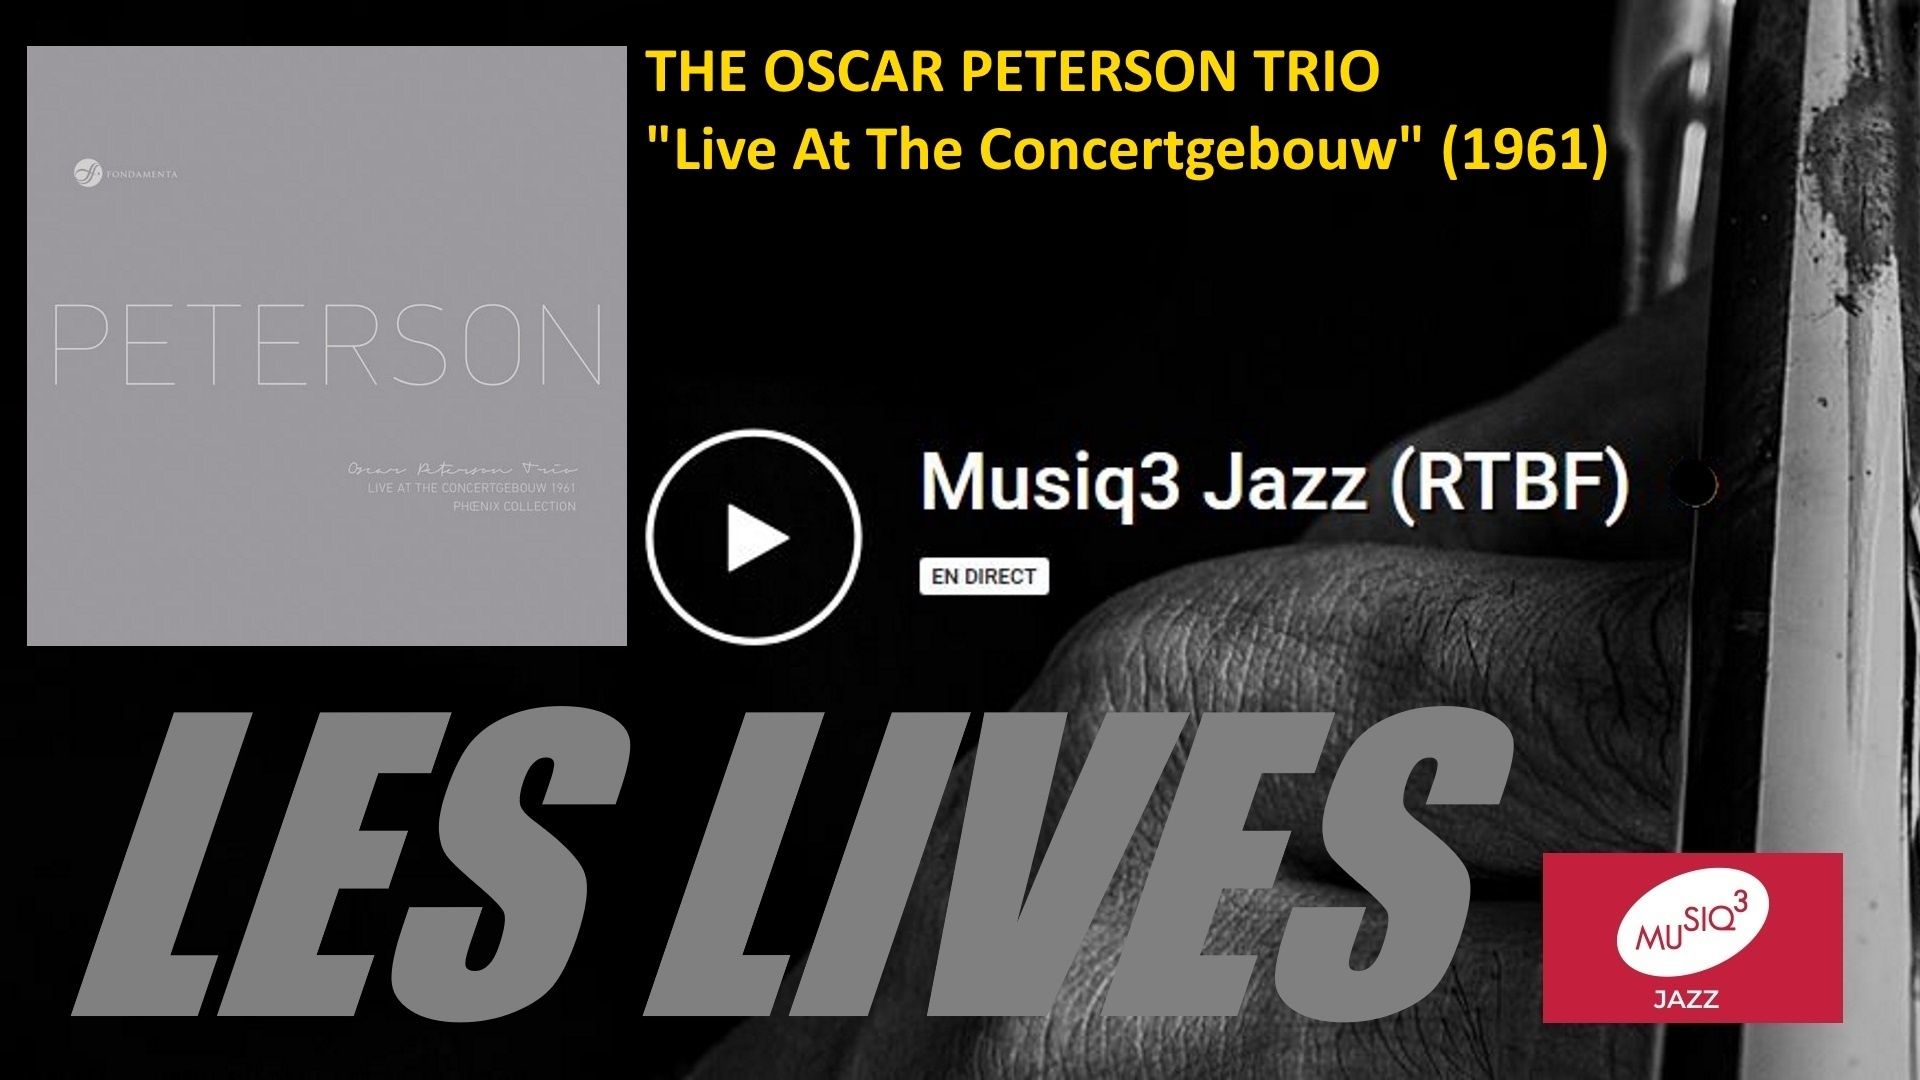 Les lives : The Oscar Peterson Trio ("Live At The Concertgebouw", 1961)